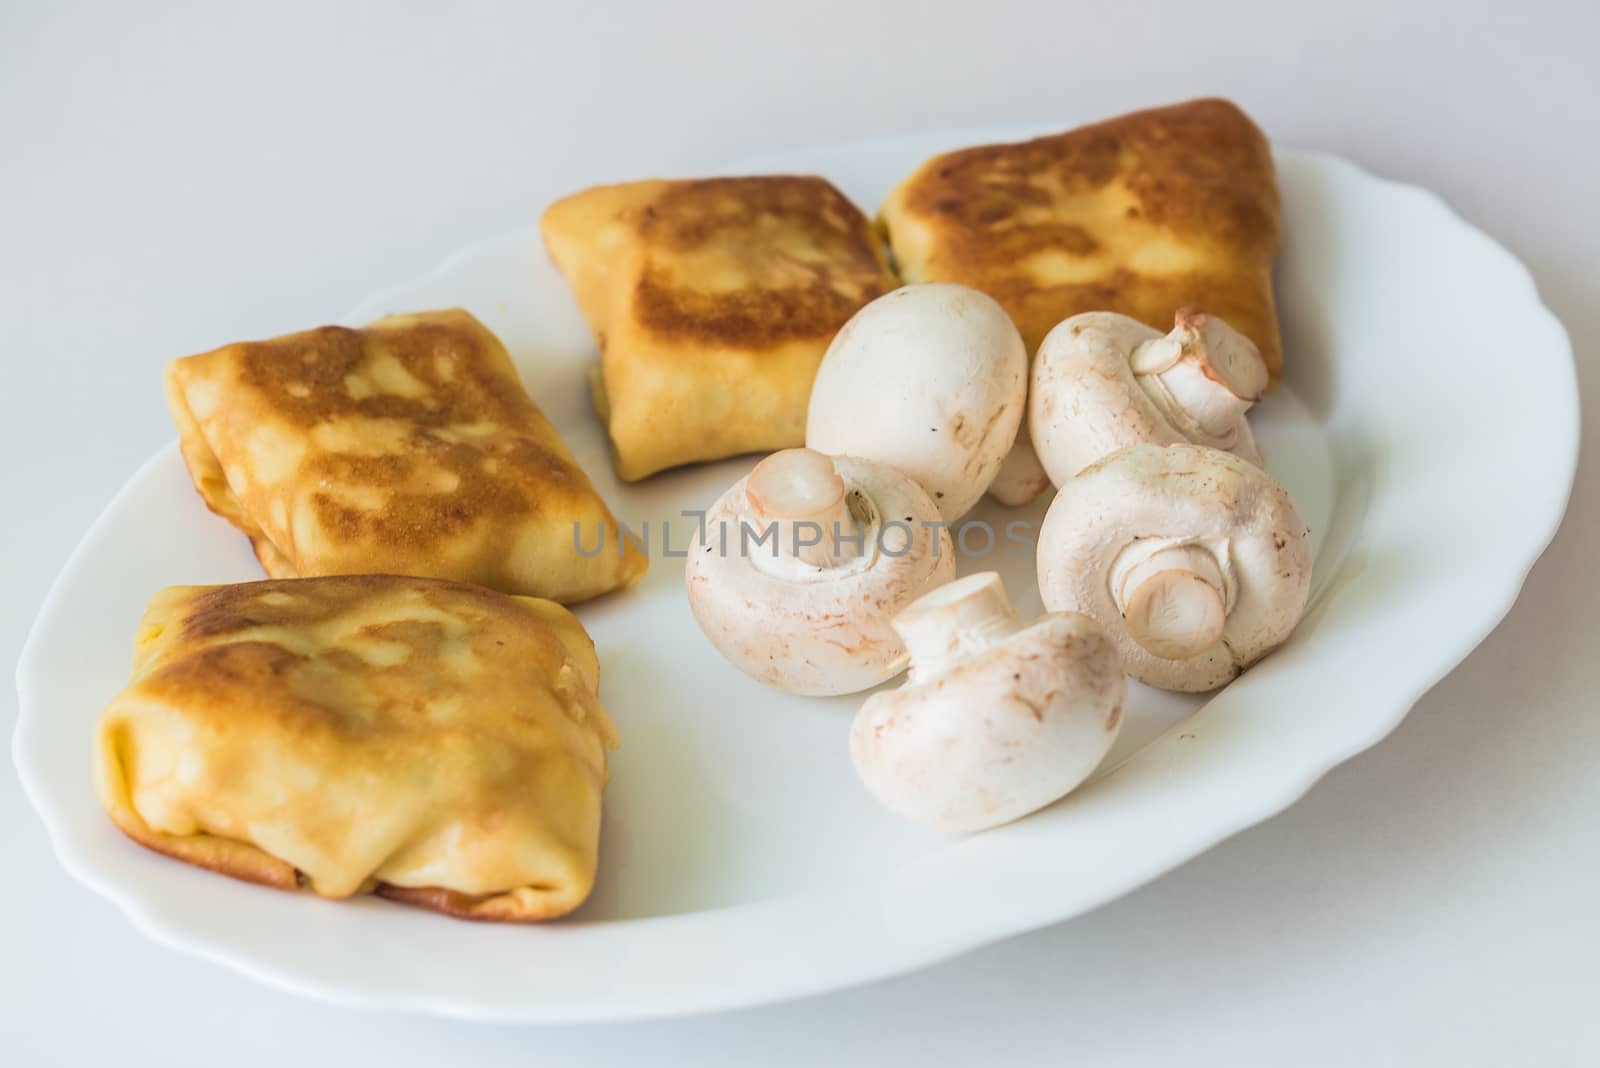 Pancakes with fillings and mushrooms on plate by okskukuruza